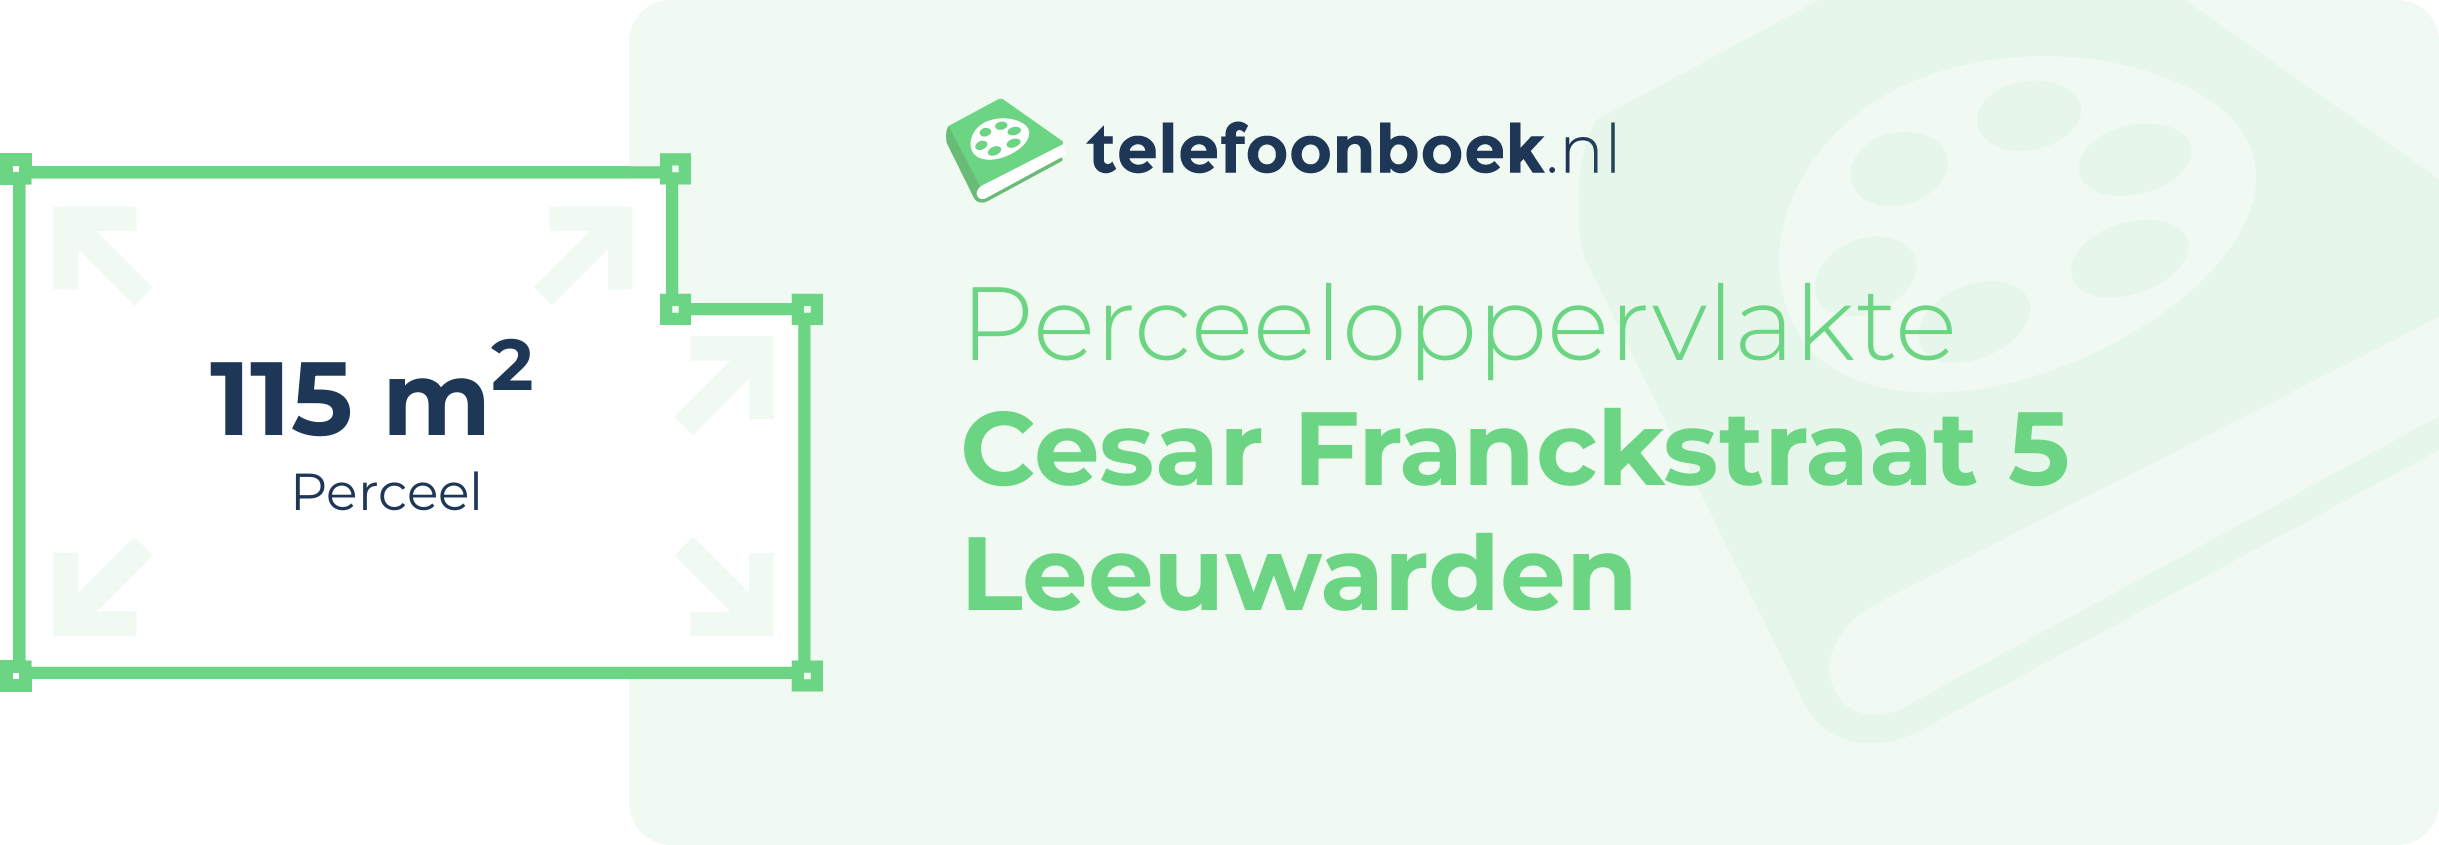 Perceeloppervlakte Cesar Franckstraat 5 Leeuwarden